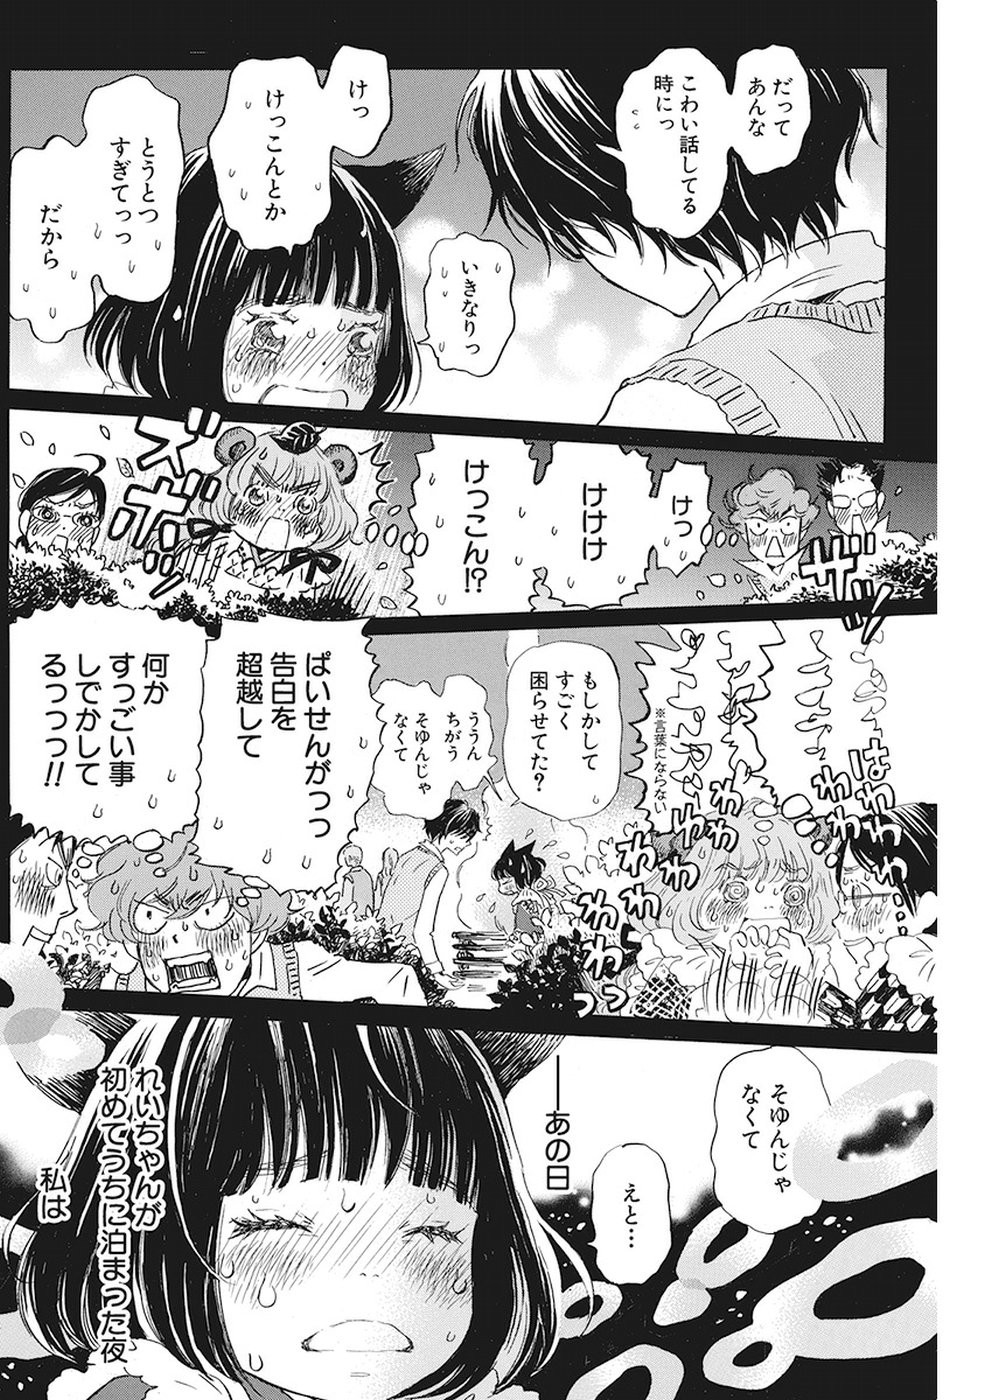 3 Gatsu no Lion - Chapter 155 - Page 4